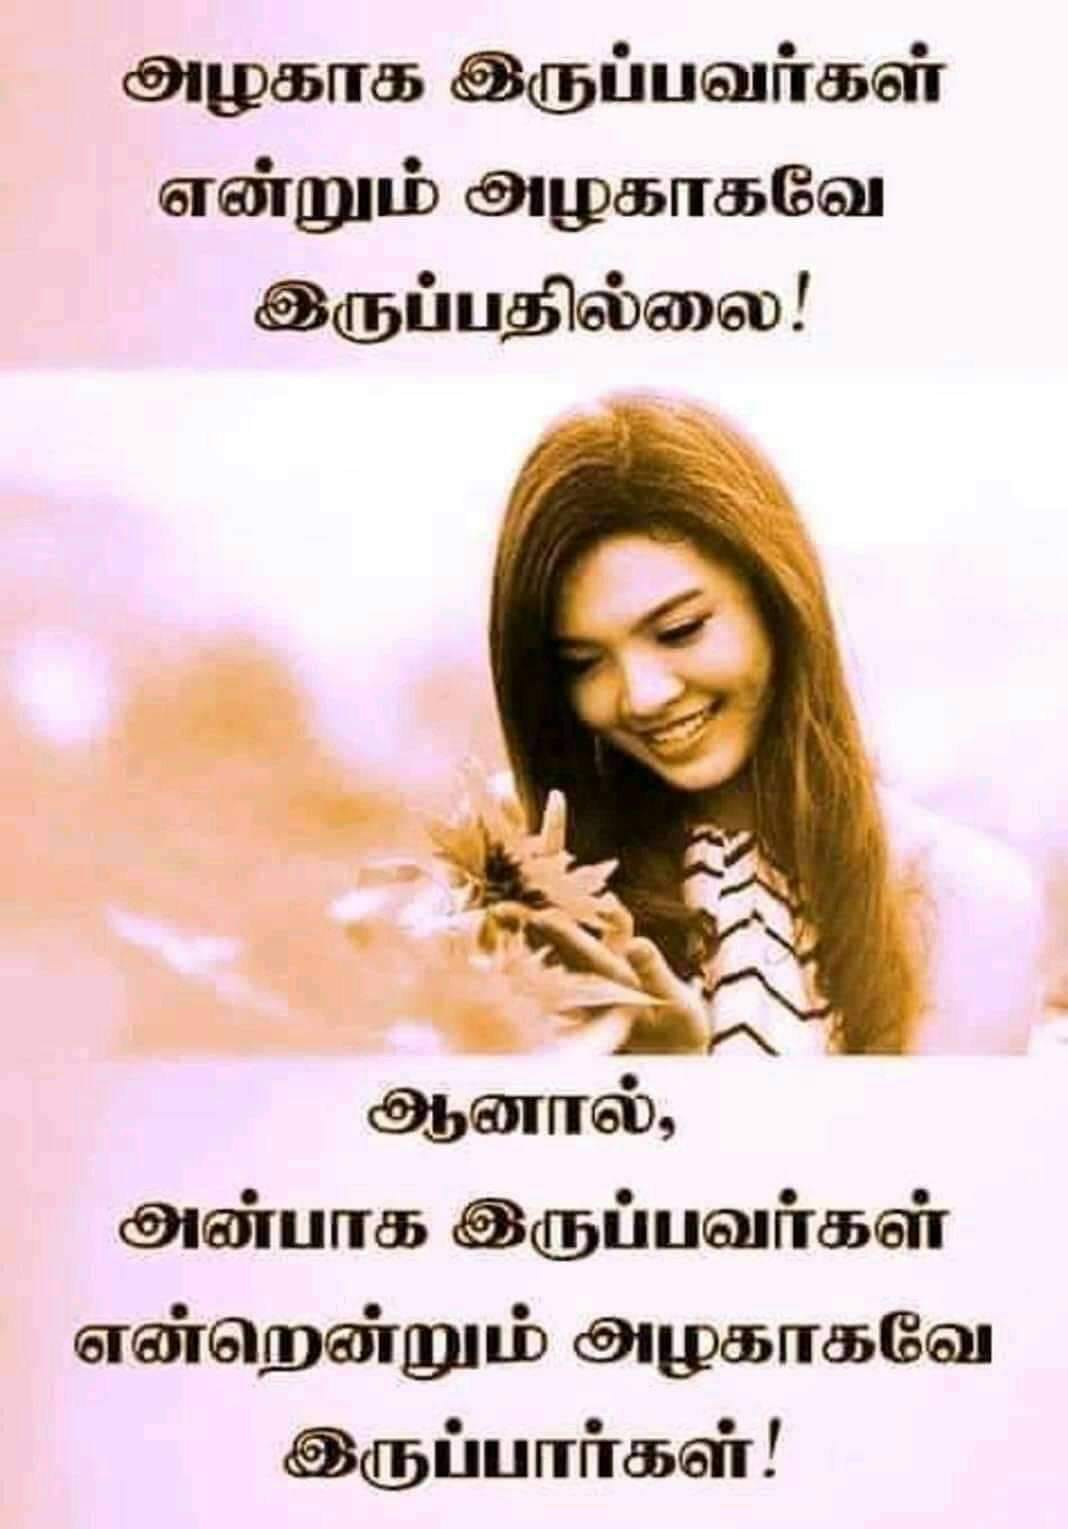 Quotes – Best Tamil Quotes